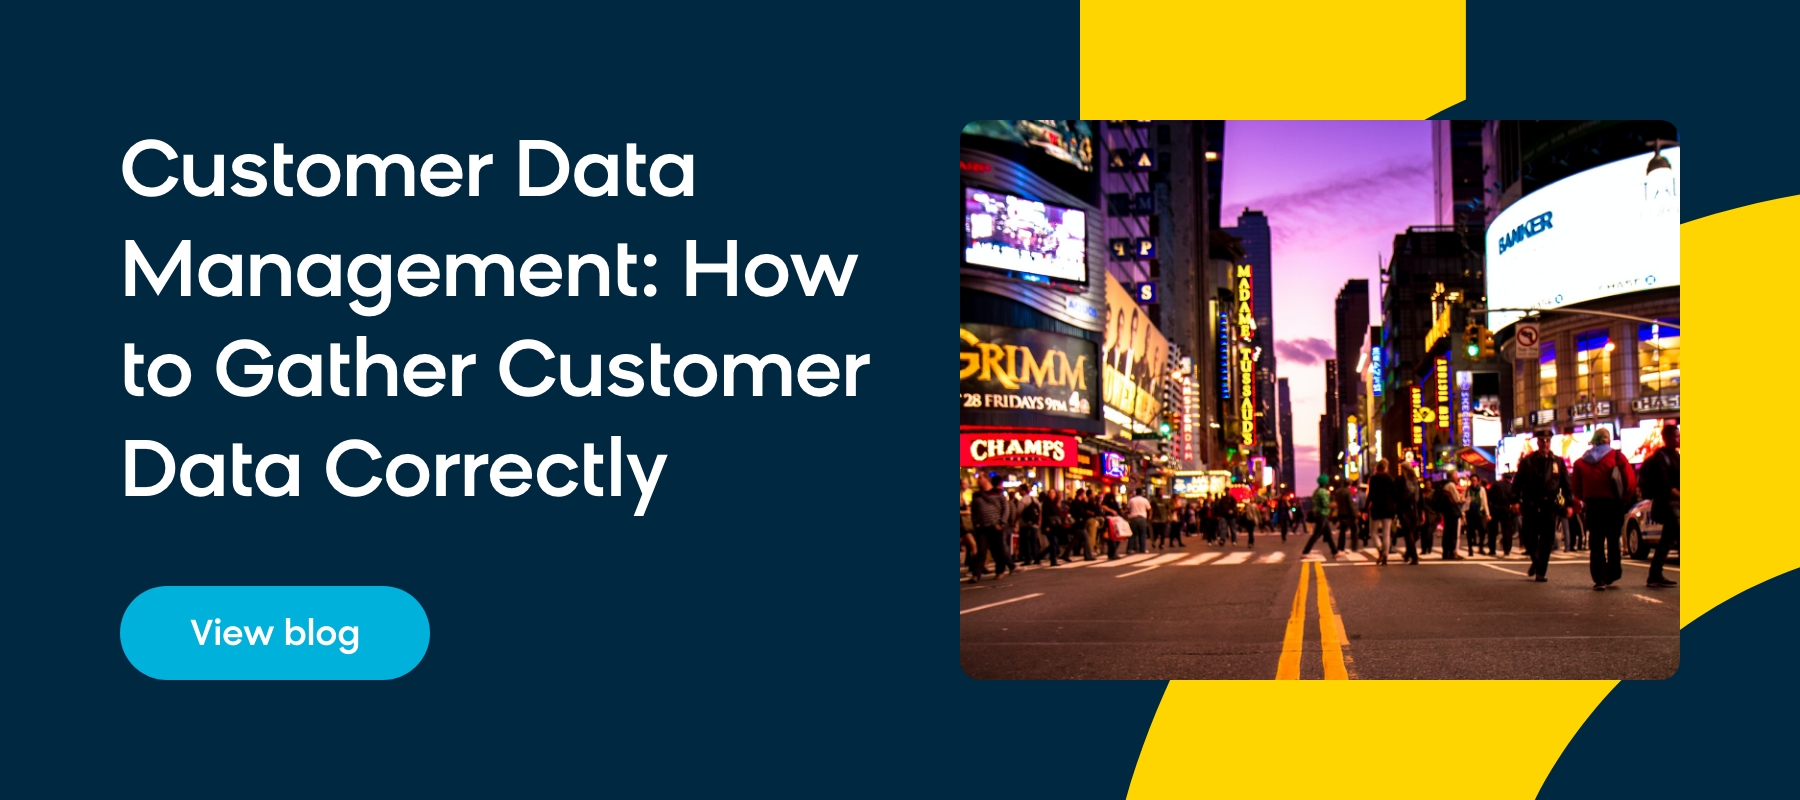 Customer Data Management: How to Gather Data Correctly